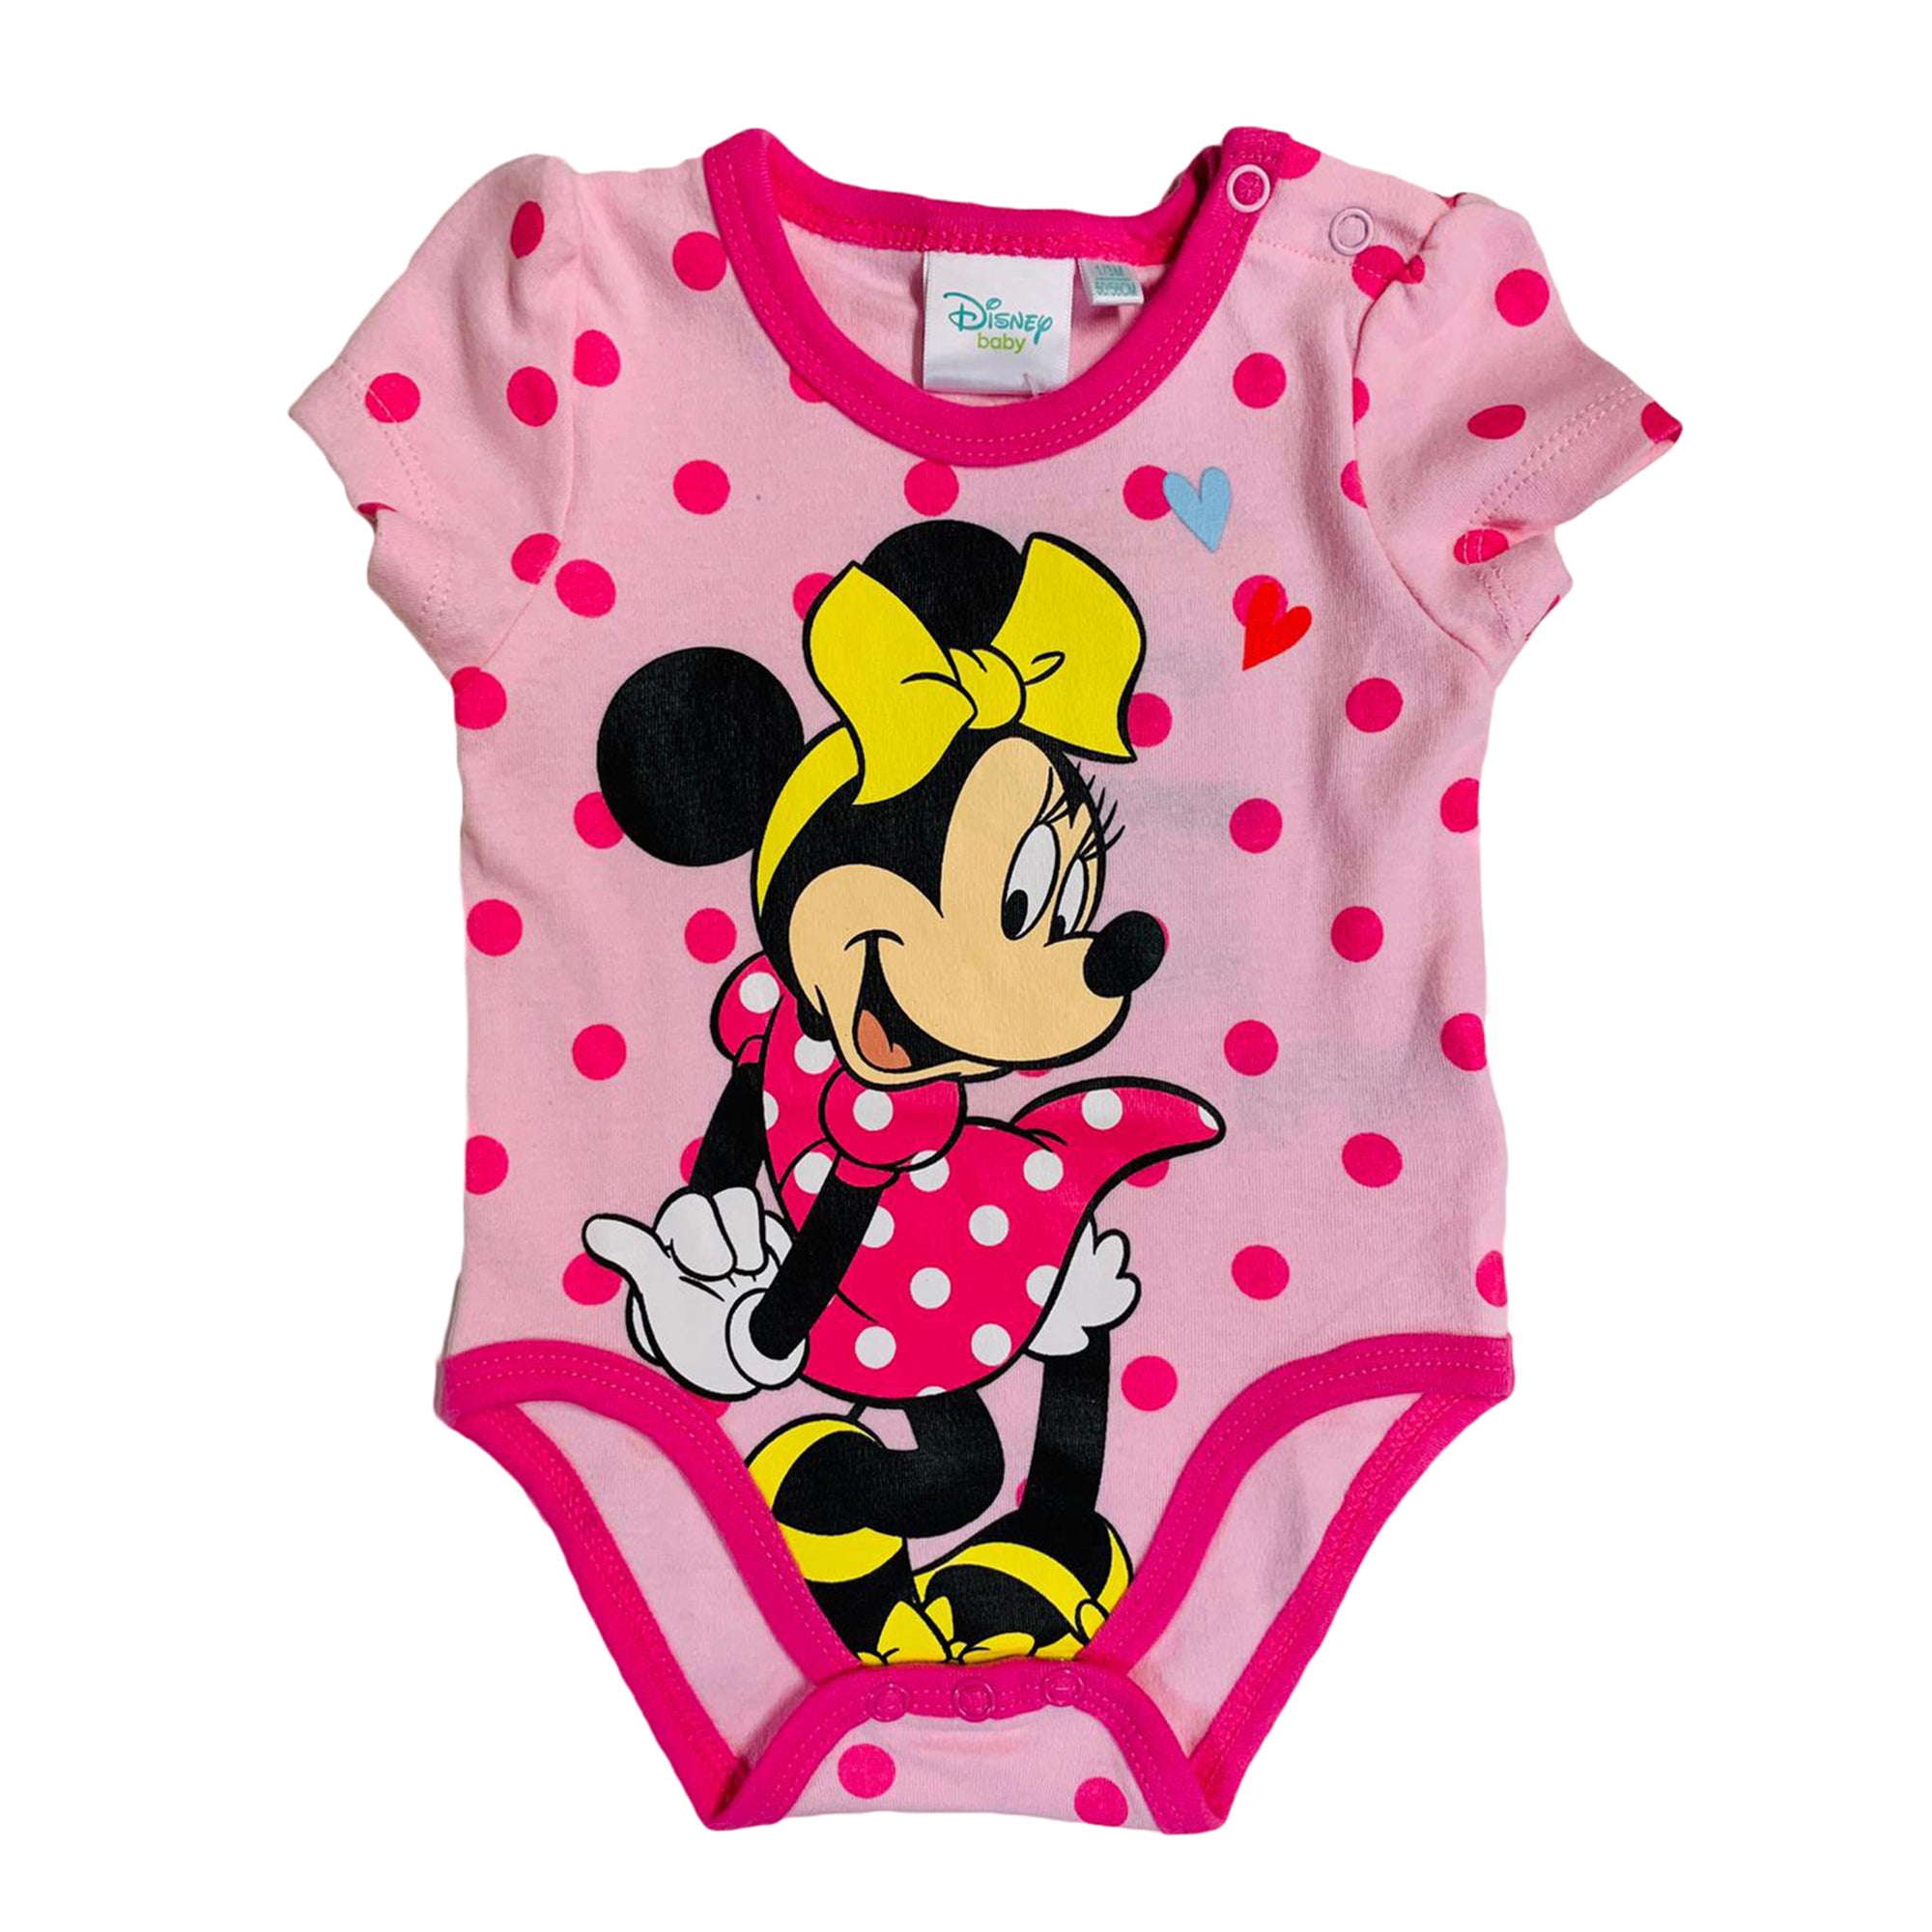 Body neonata manica corta Disney tutina Minnie 2618